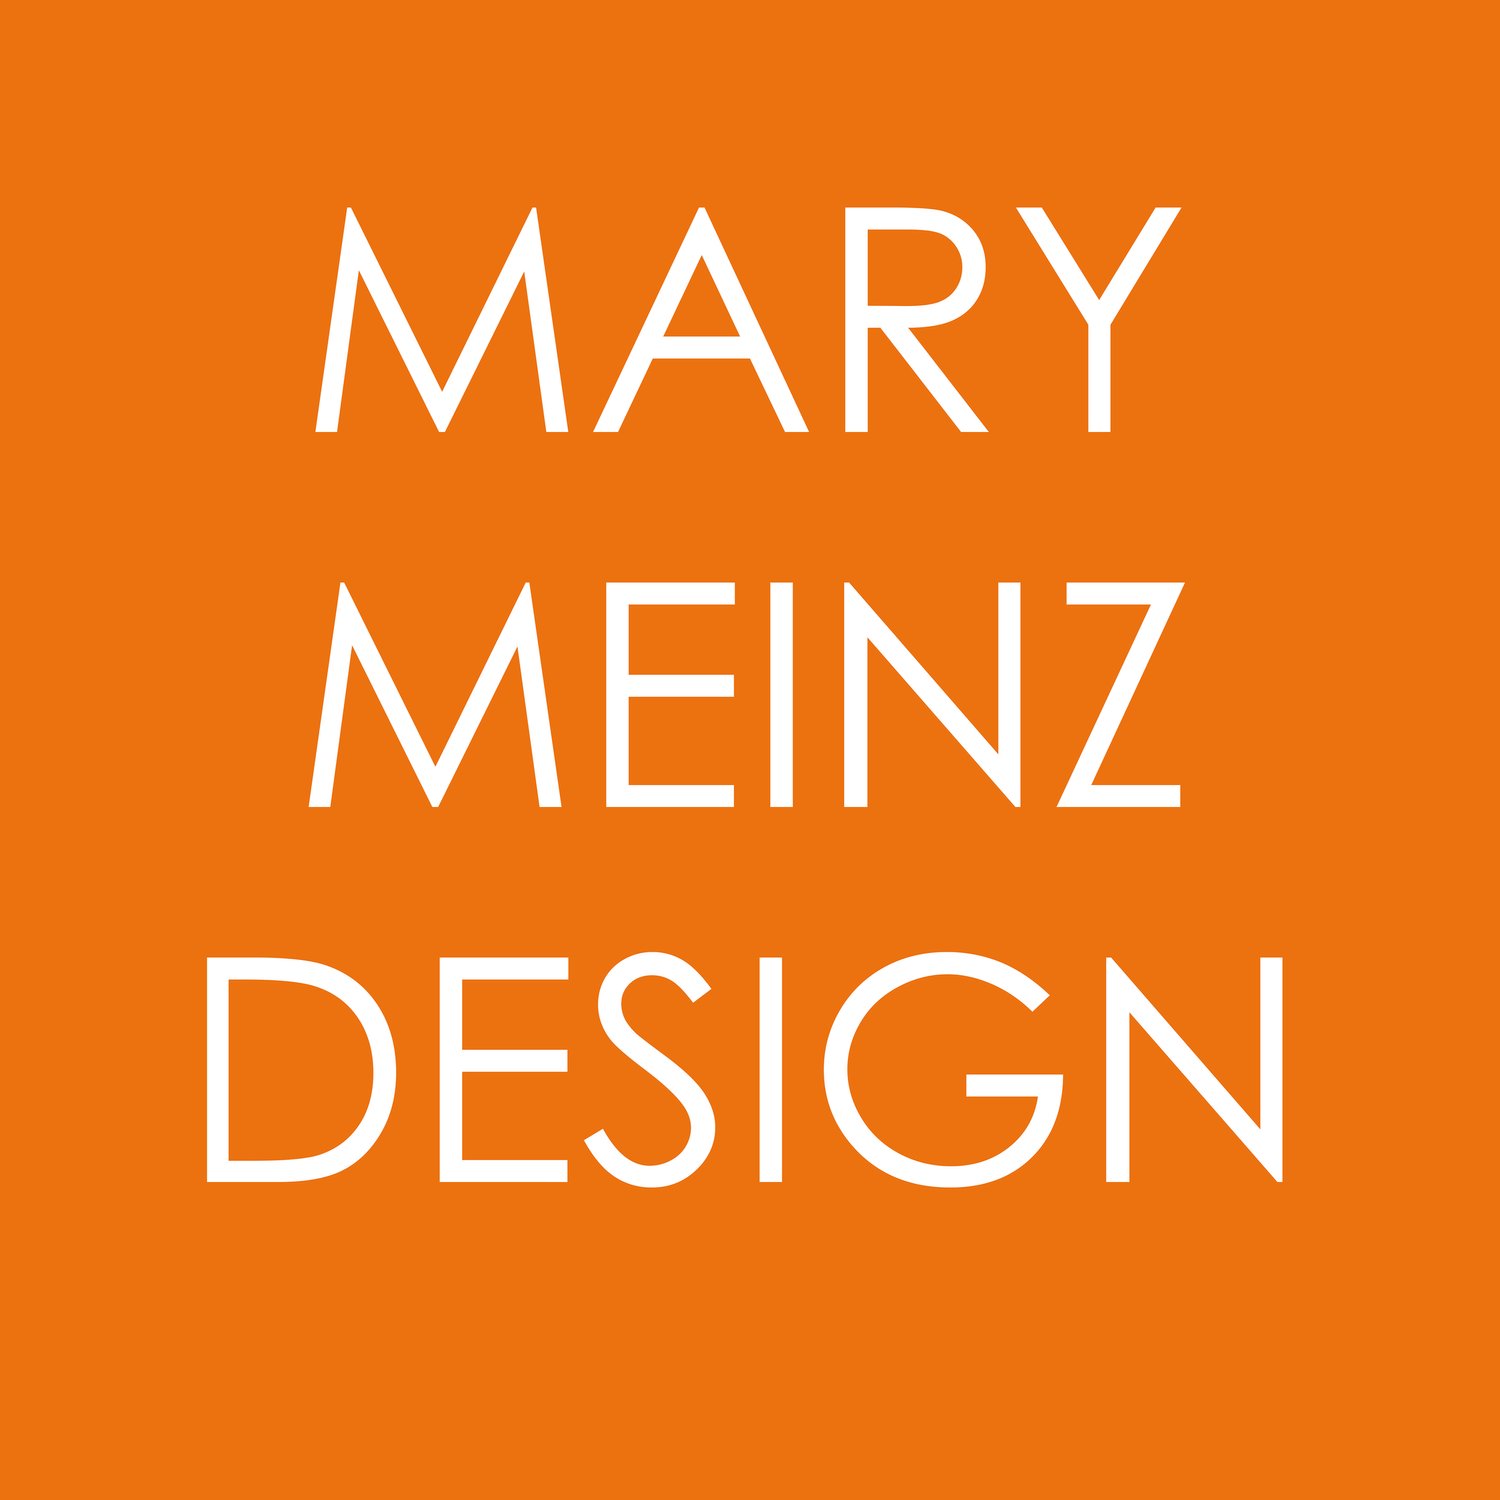 MARY MEINZ DESIGN